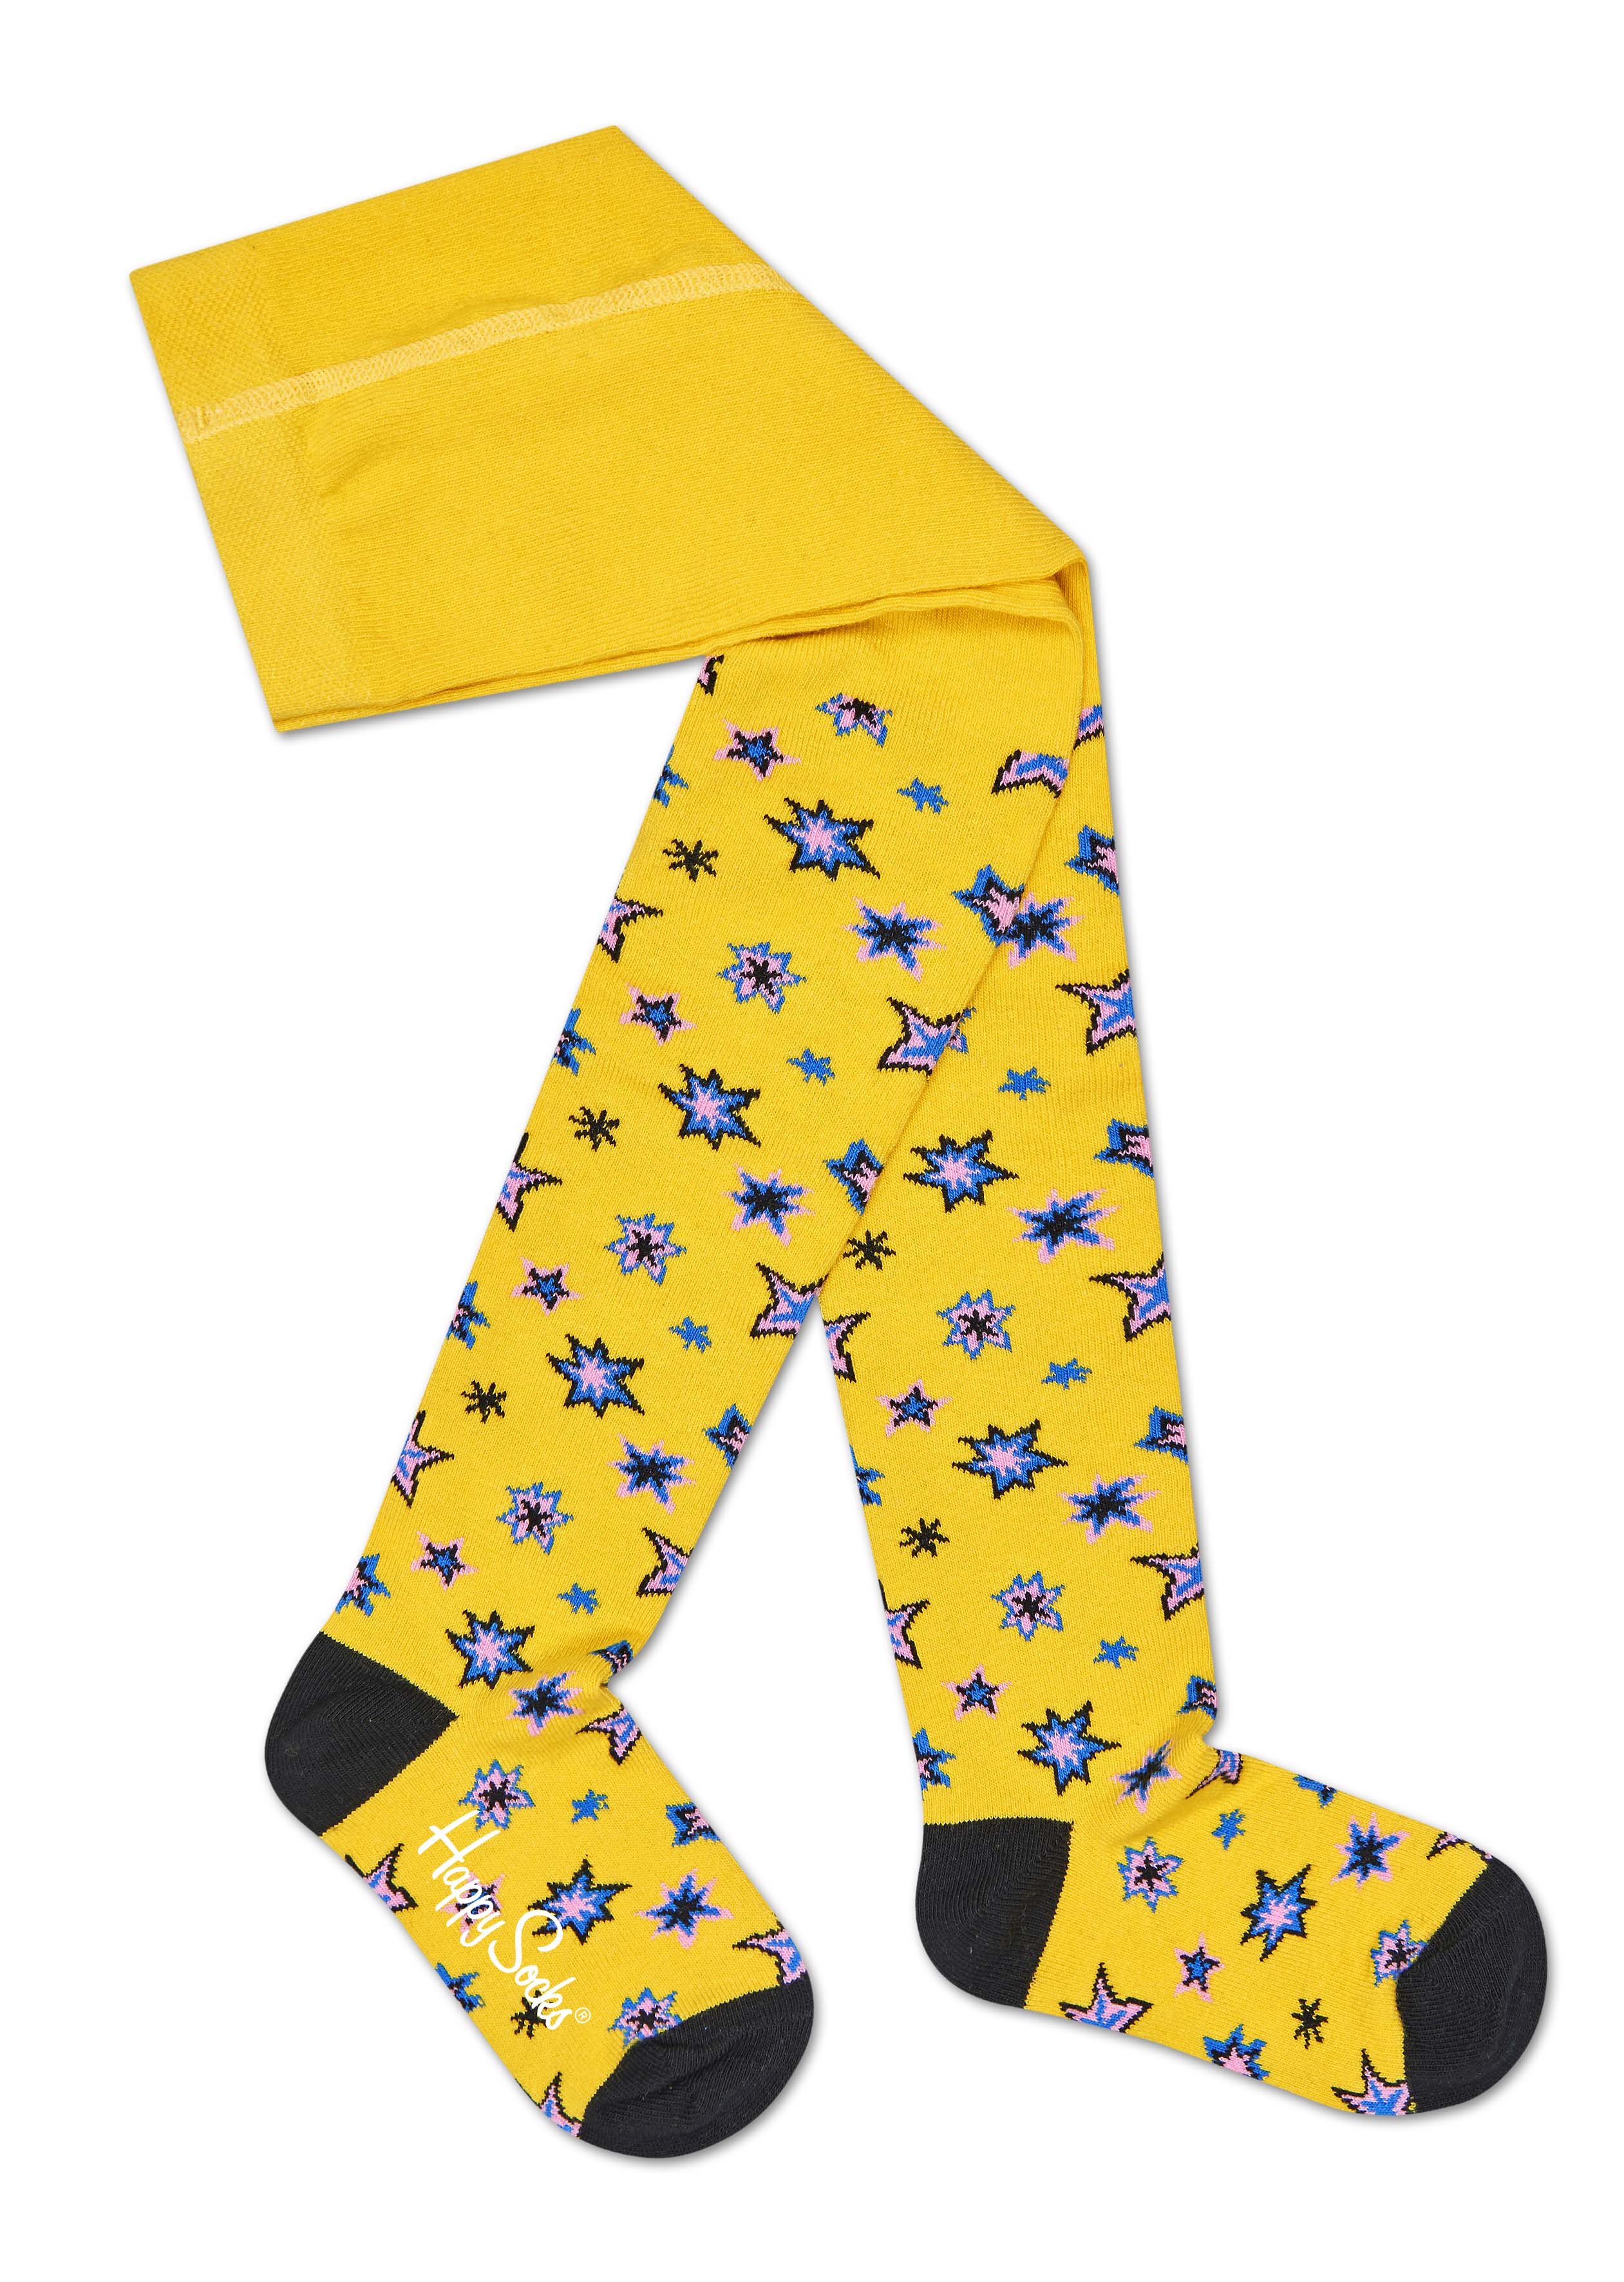 Колготки детские Happy socks, цвет: желтый. KBNG60. Размер 12, 0,5-1 год